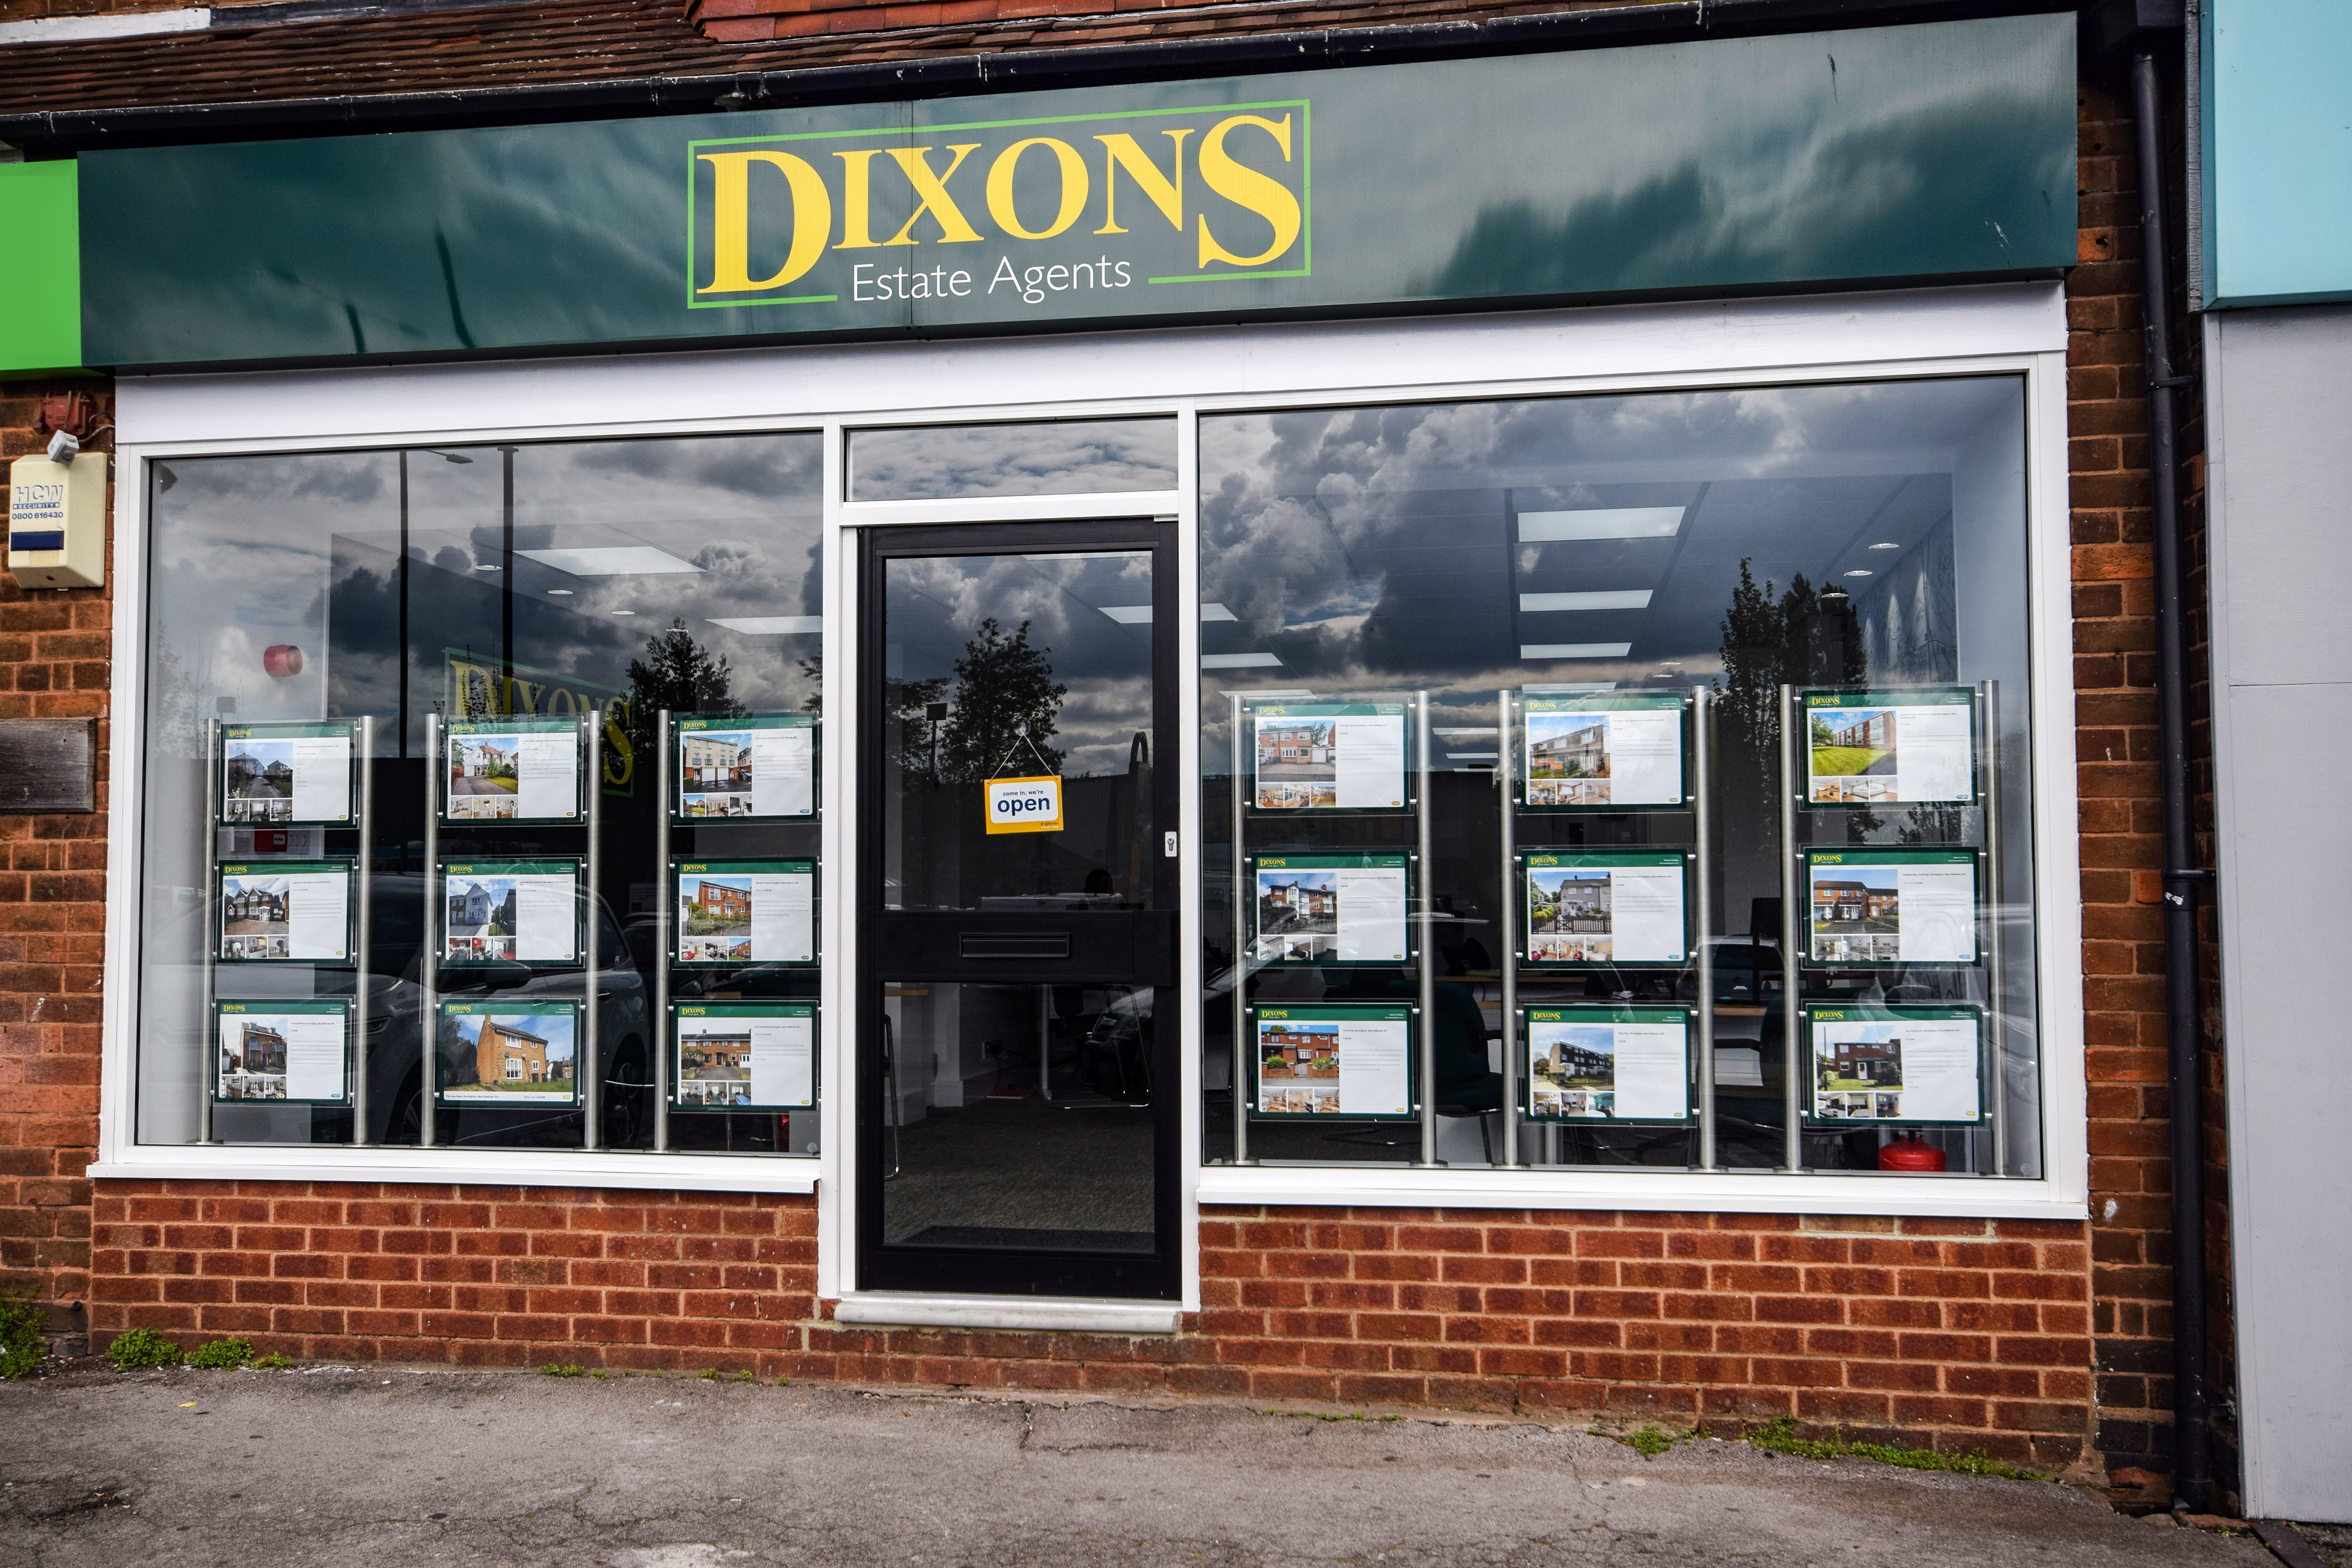 Dixons Sales and Letting Agents Castle Bromwich Birmingham 01213 690847